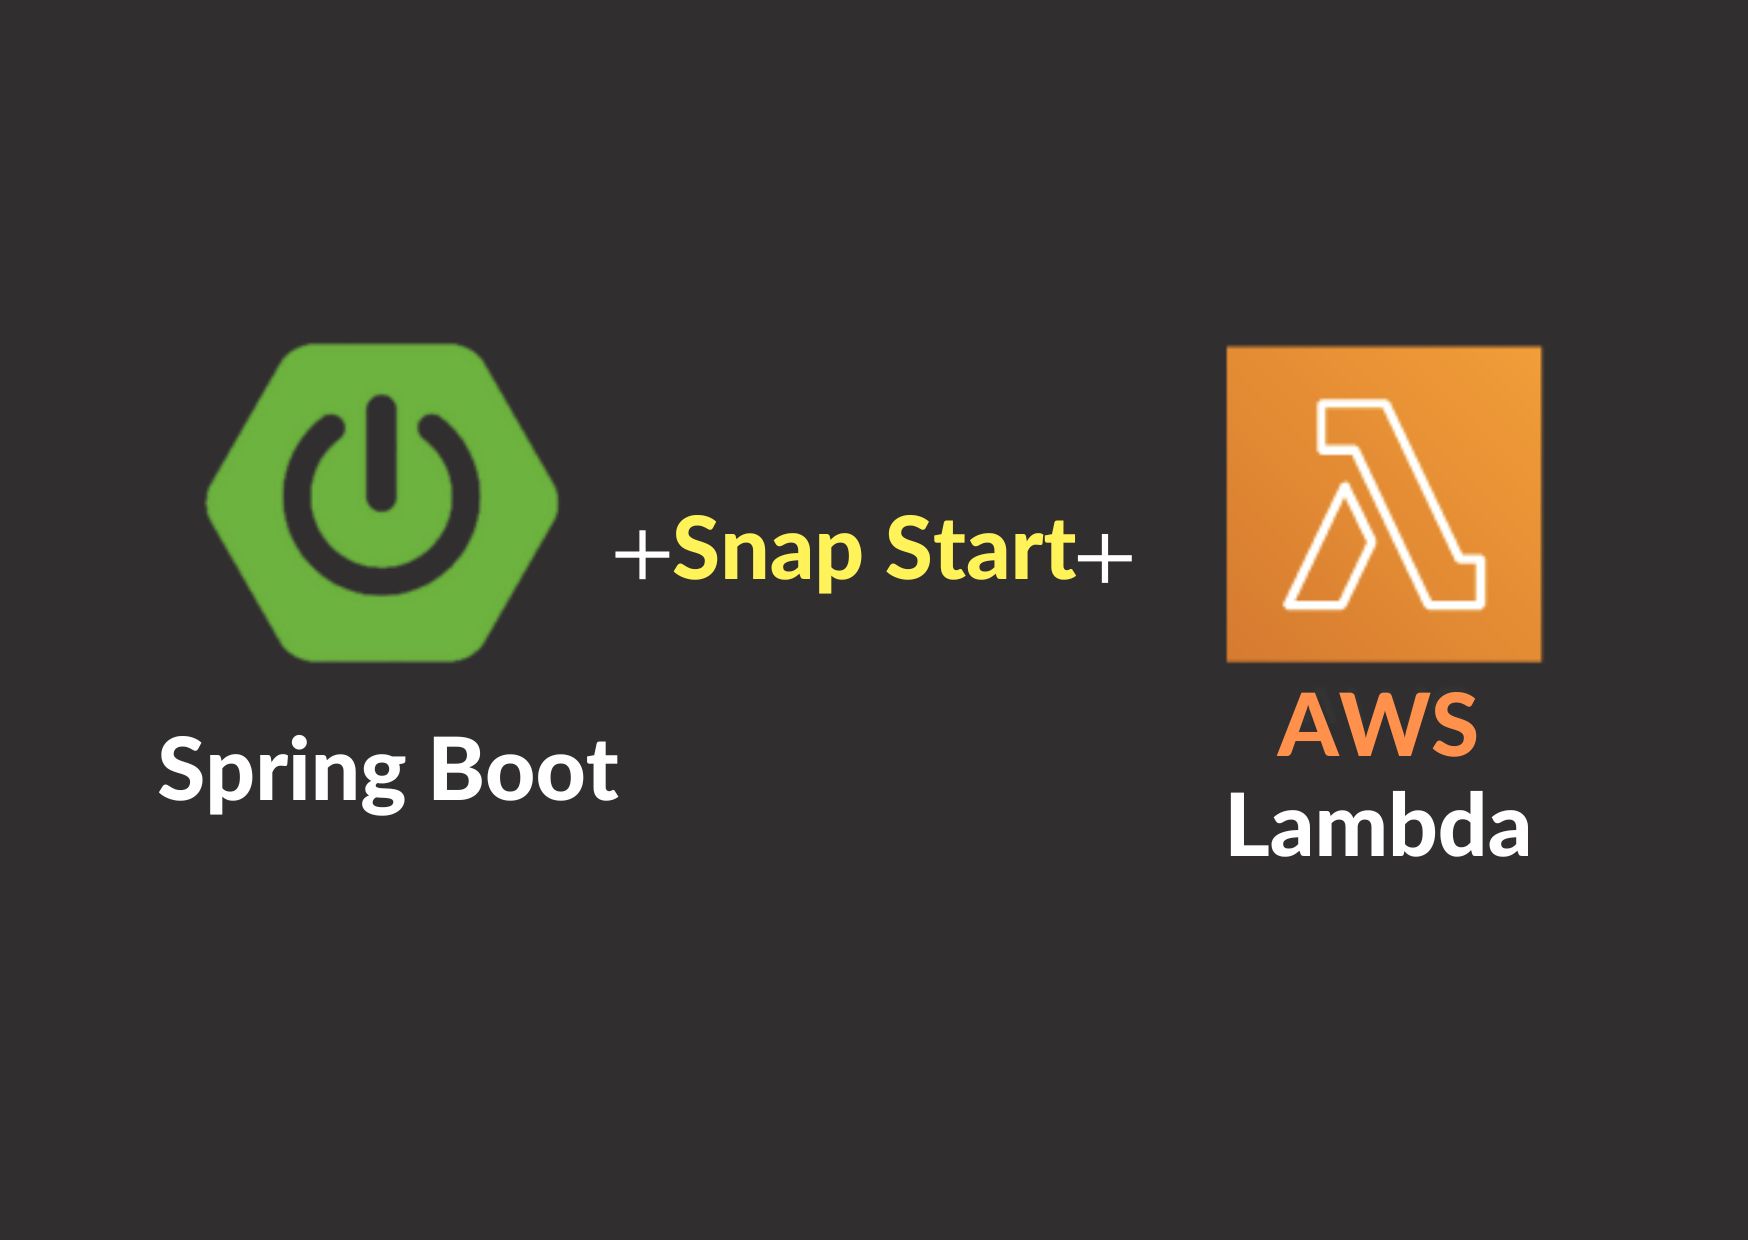 Kick Start Spring Boot On AWS Lambda with Snap Start